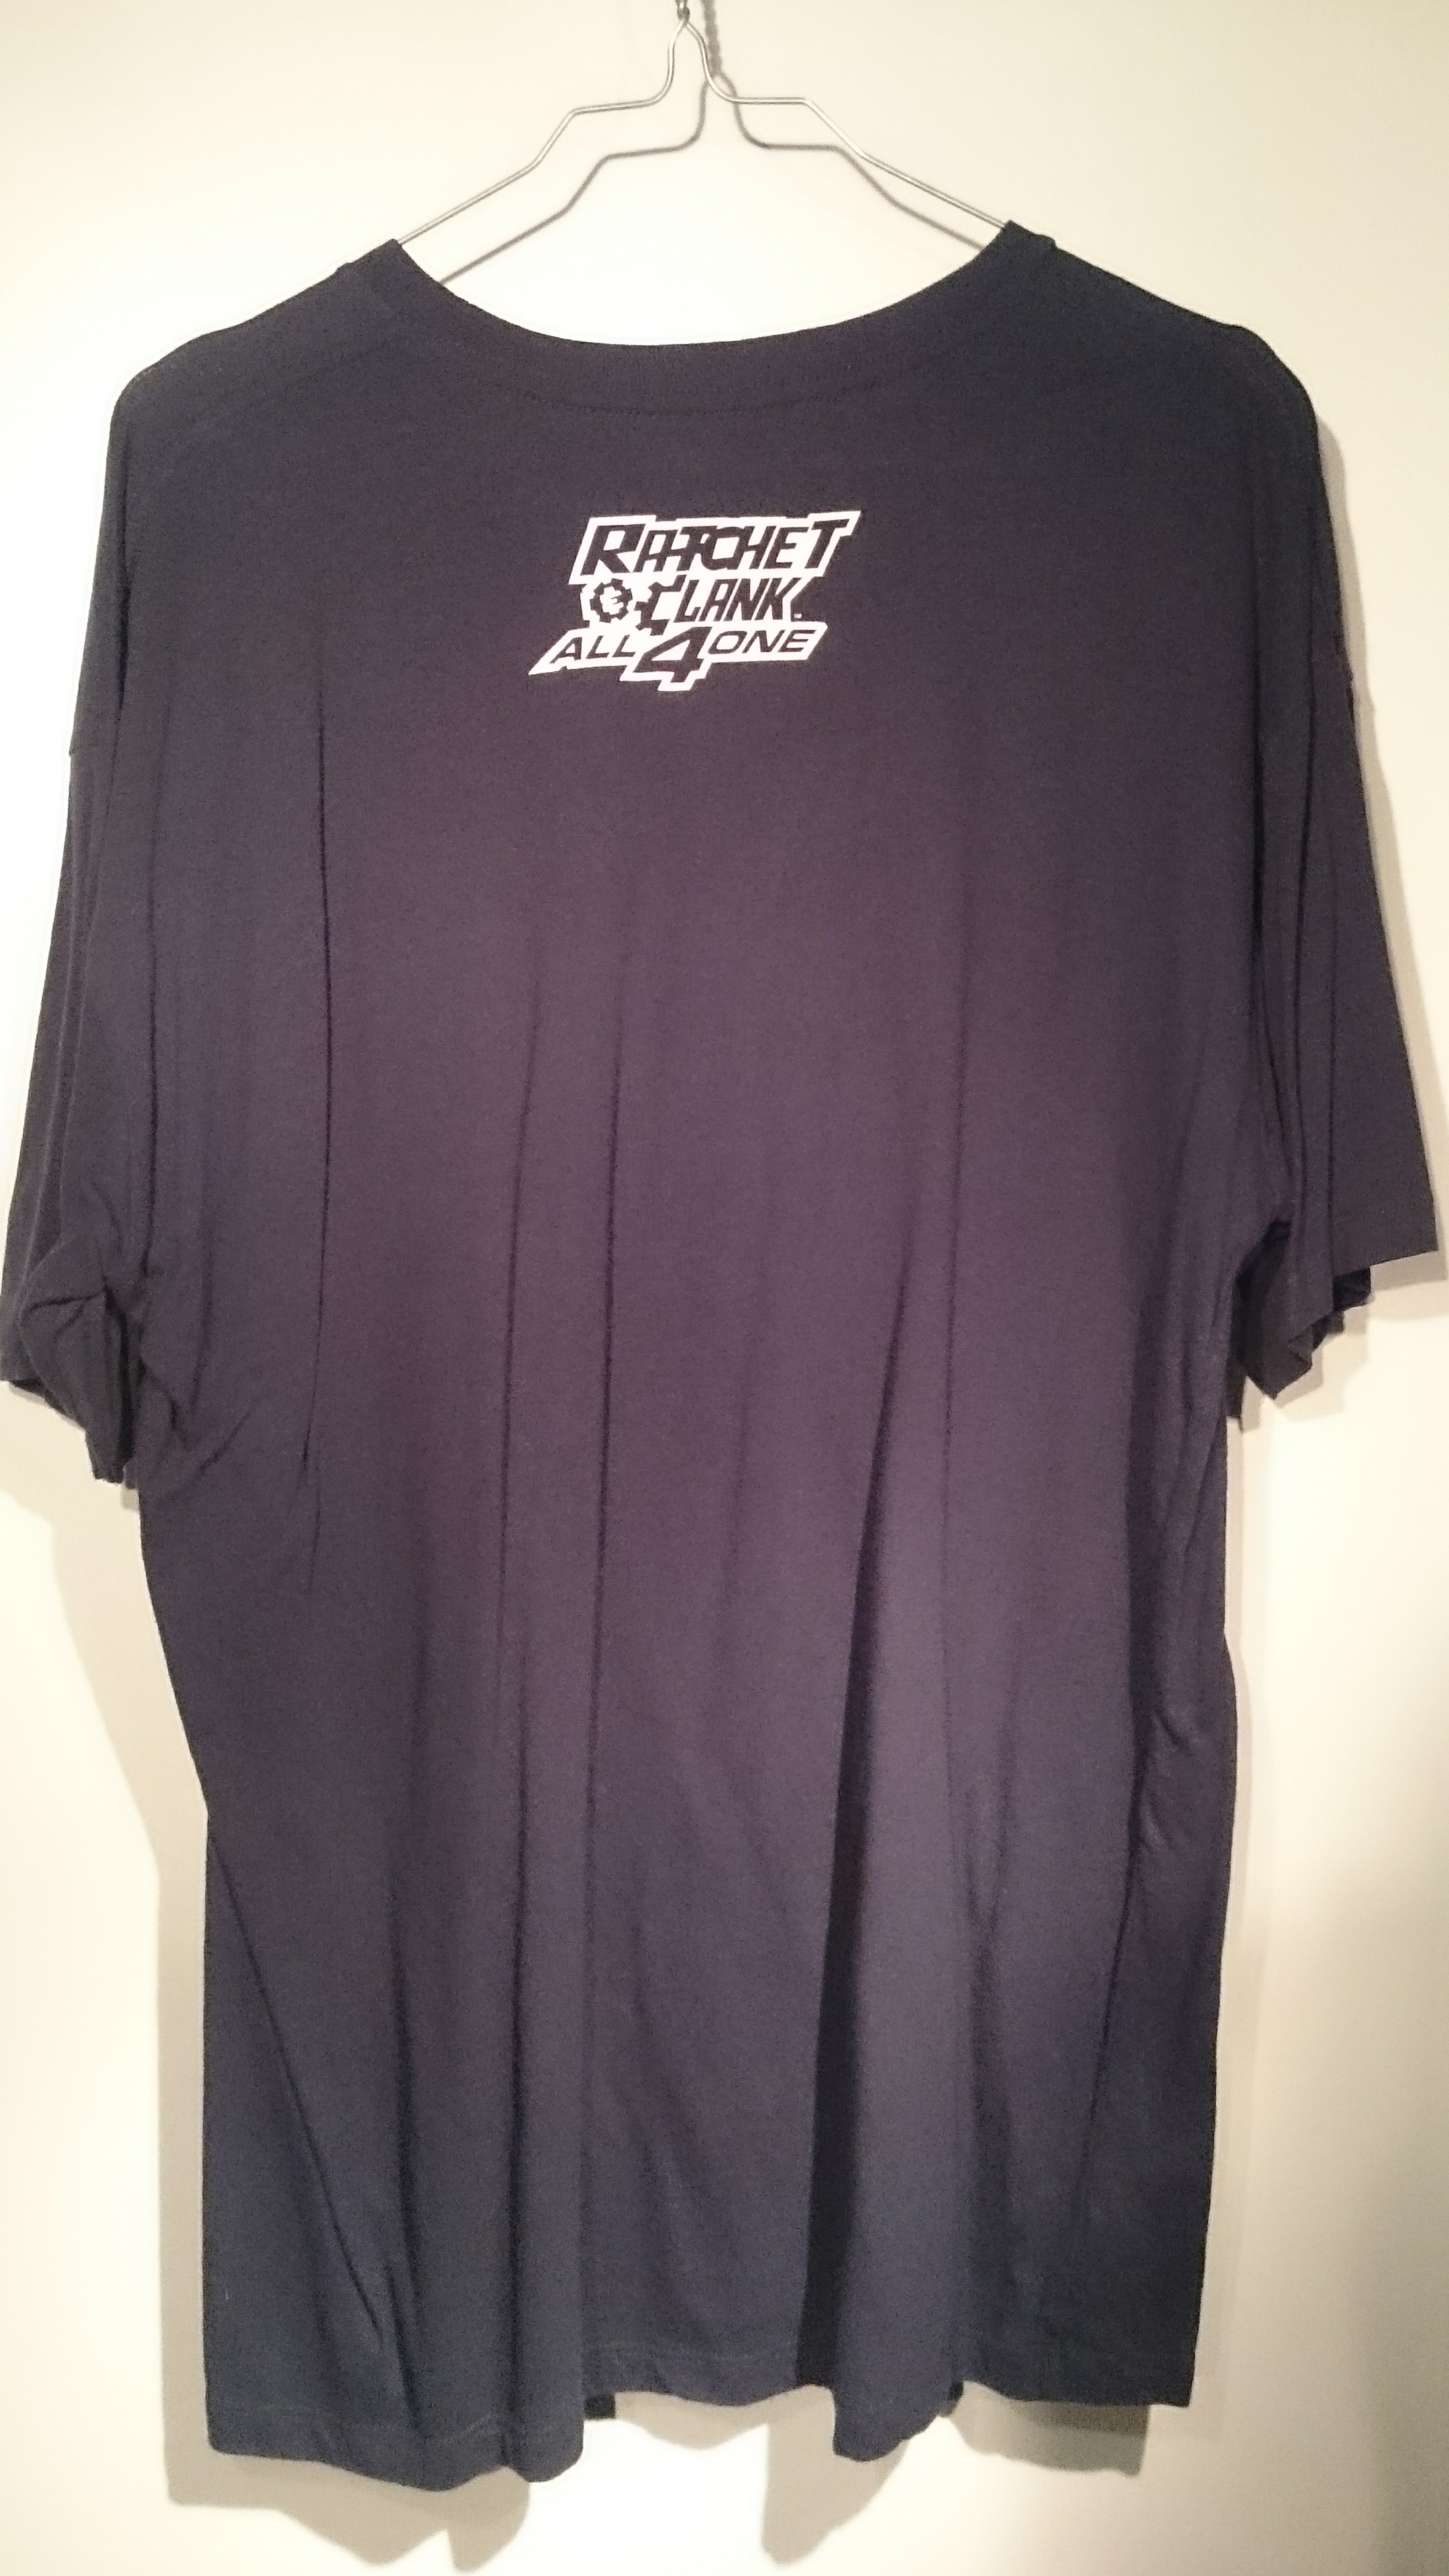 T-shirt Ratchet & Clank All 4 One - Clothes - Merchandise - Ratchet Galaxy